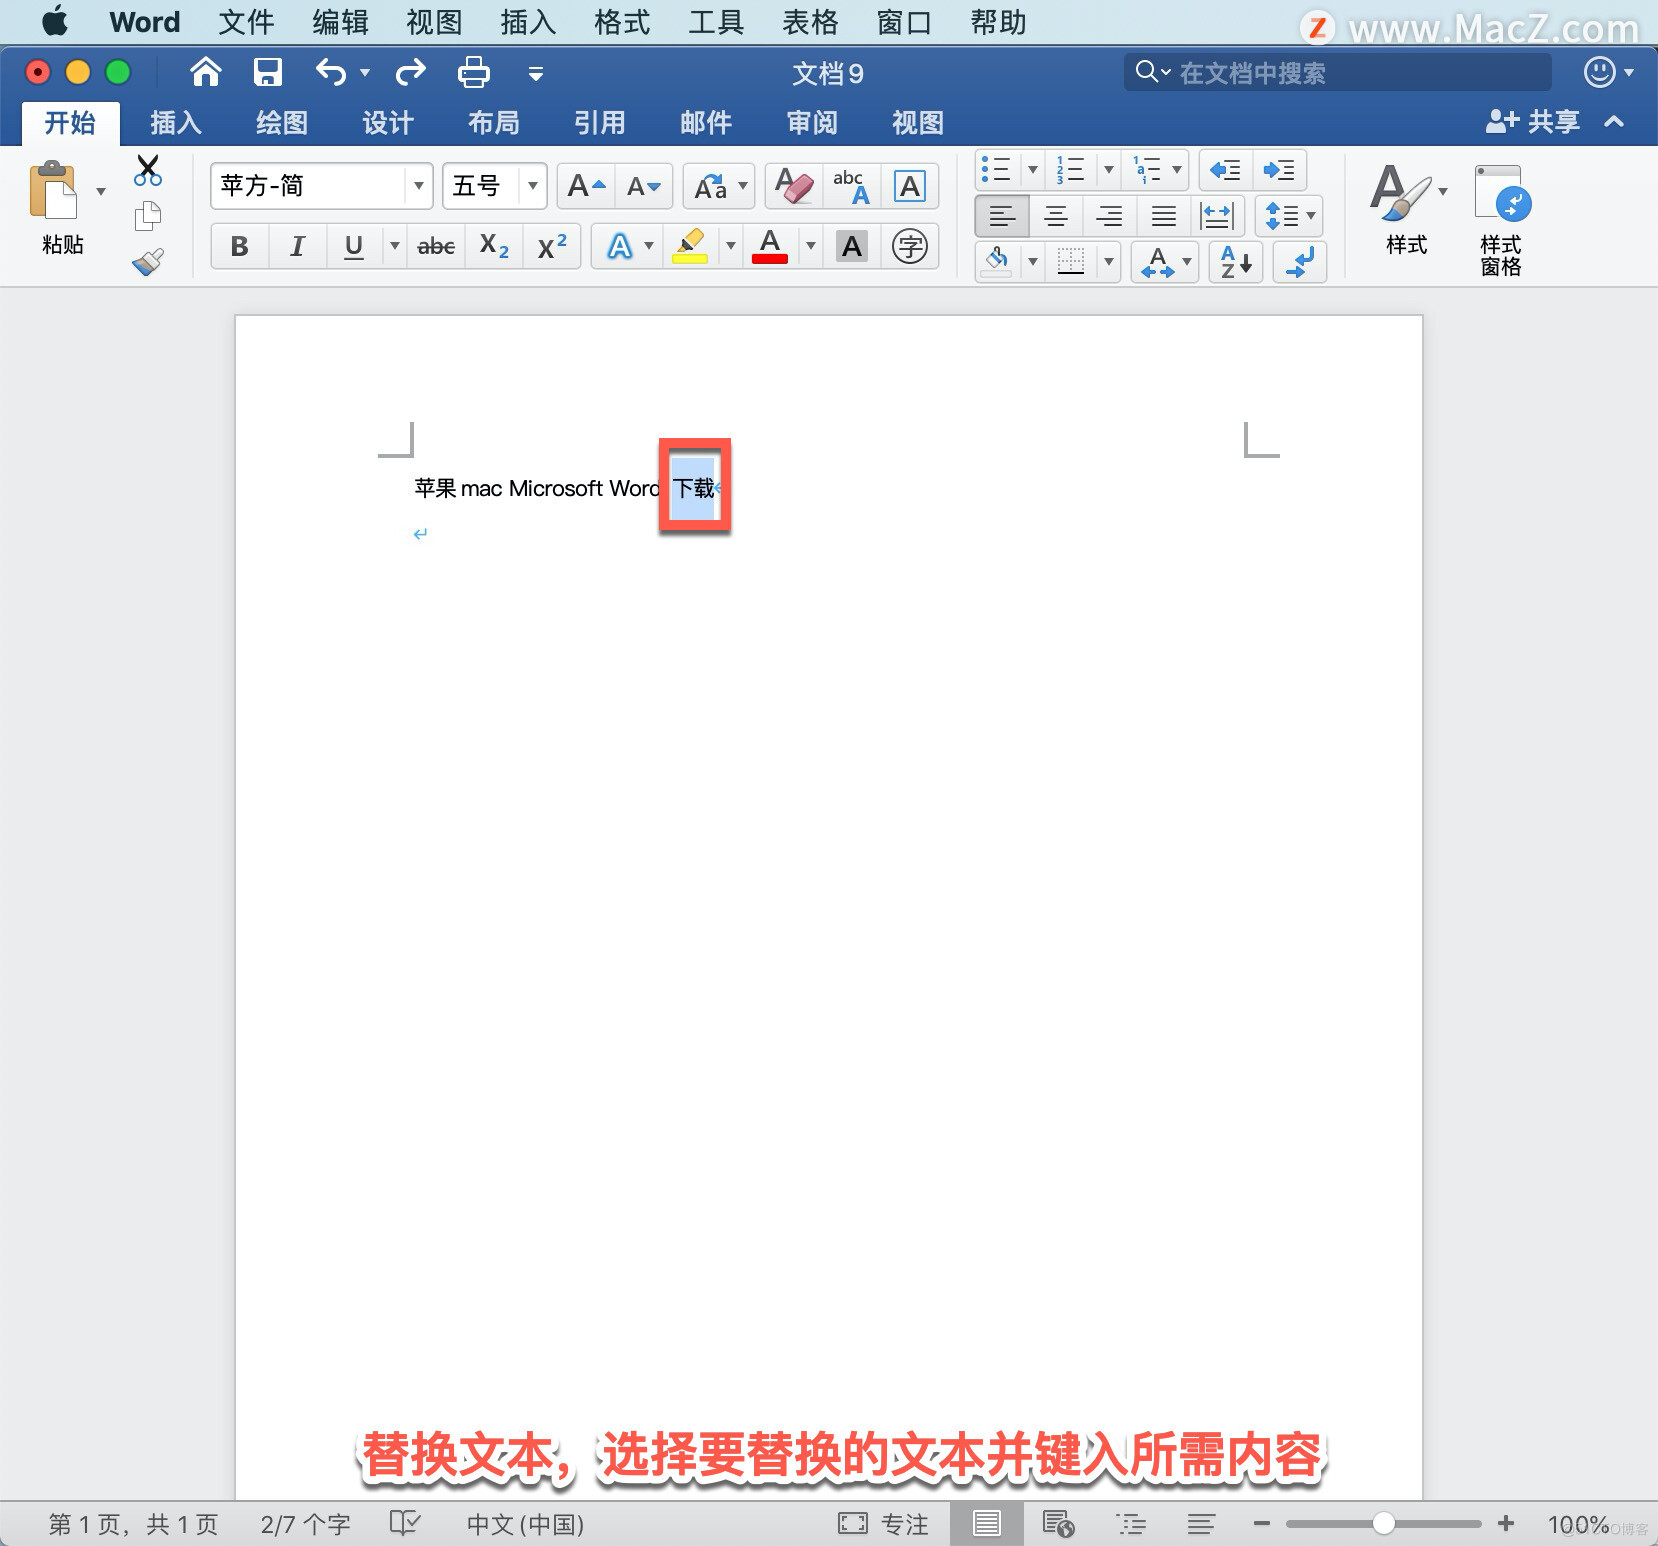 Microsoft Word教程「1」，如何在 Word 中创建文档、添加和编辑文本？_下划线_06